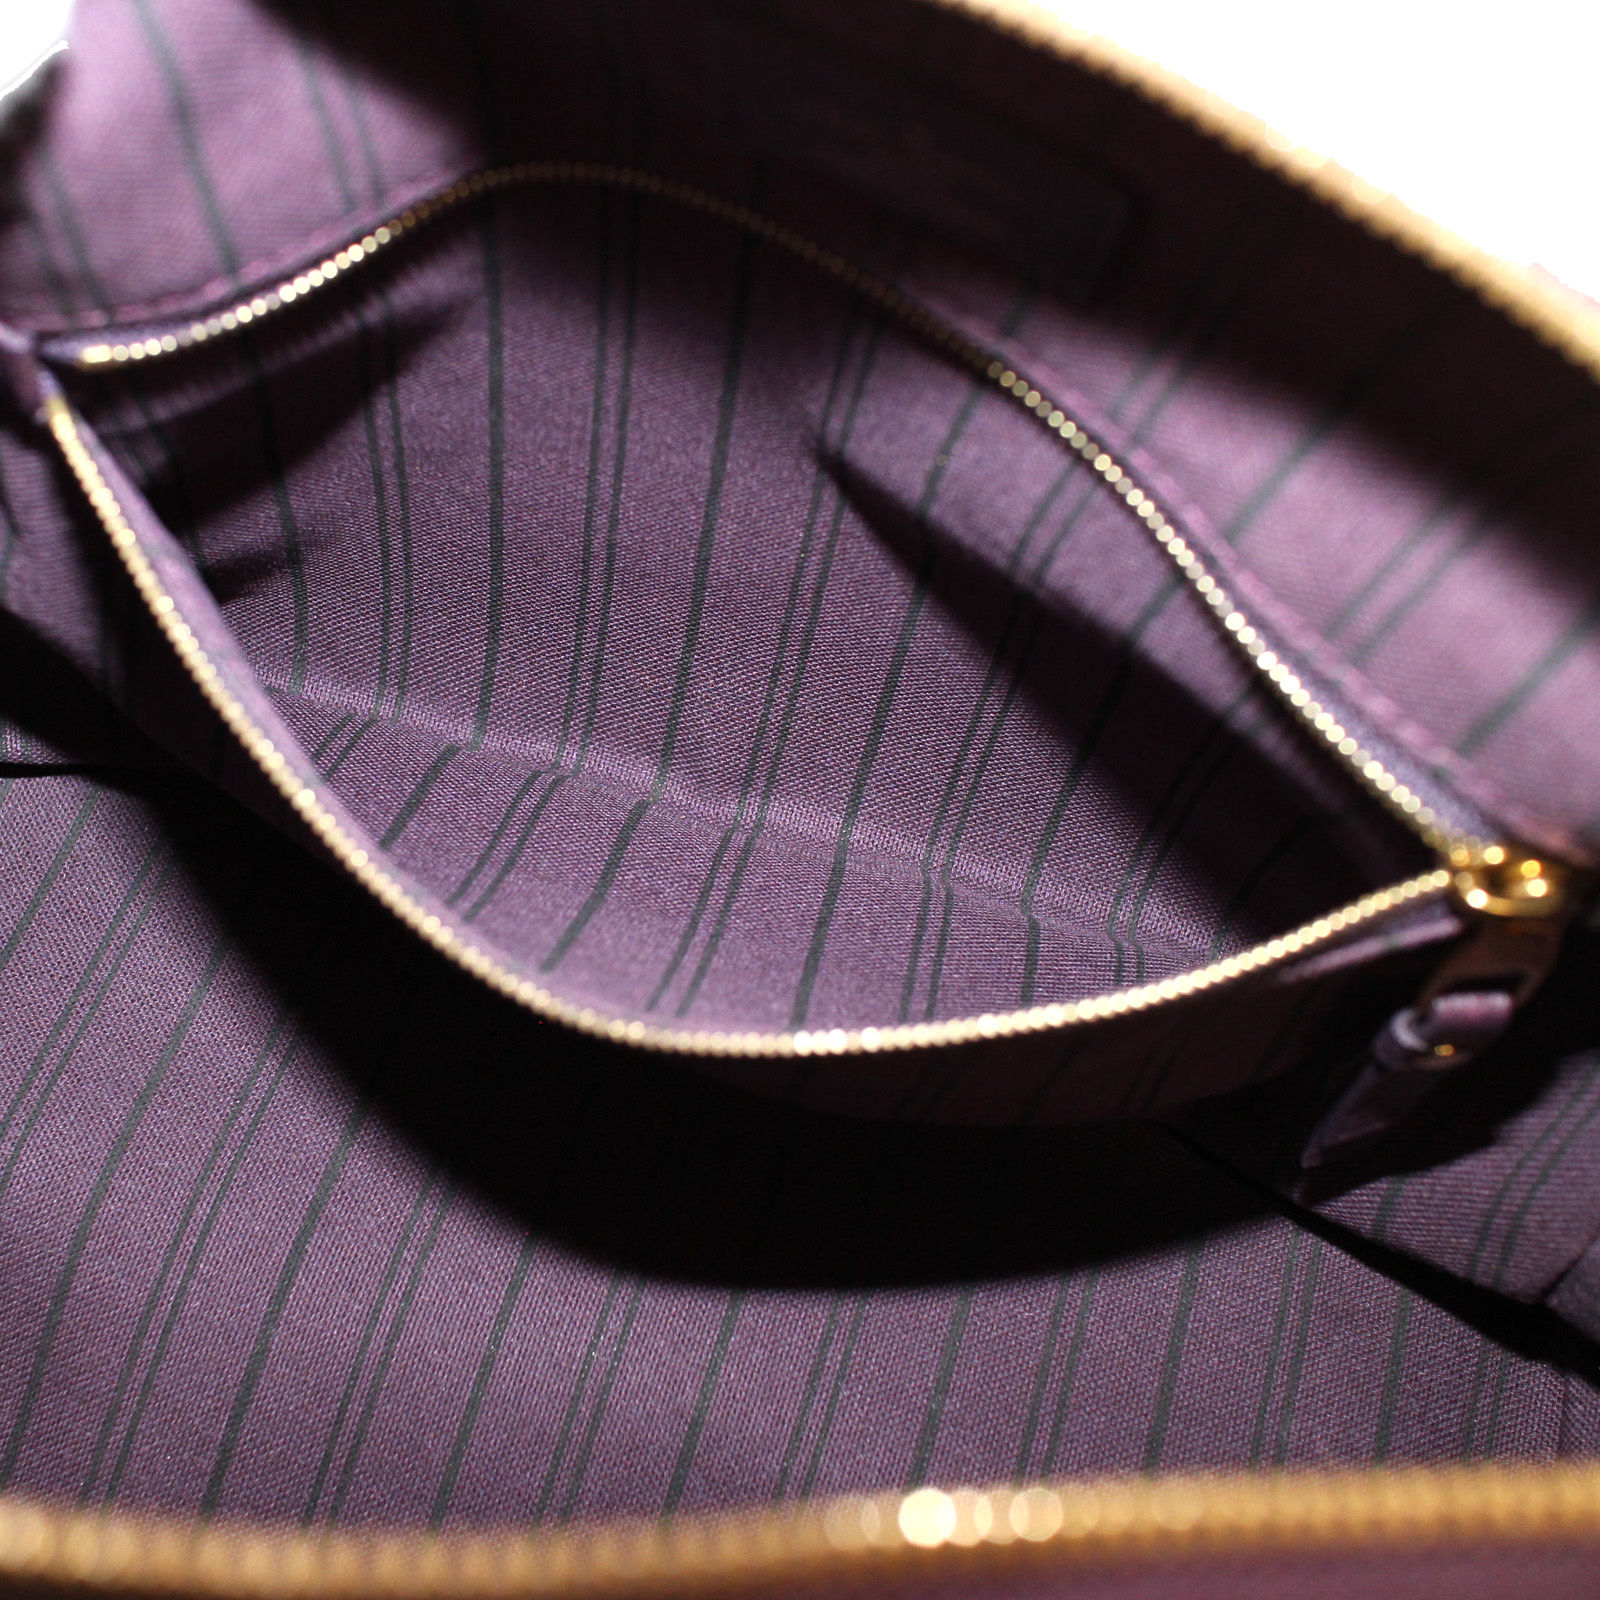 LOUIS VUITTON MONOGRAM Empreinte Speedy 25 Purple Shoulder Bag #20